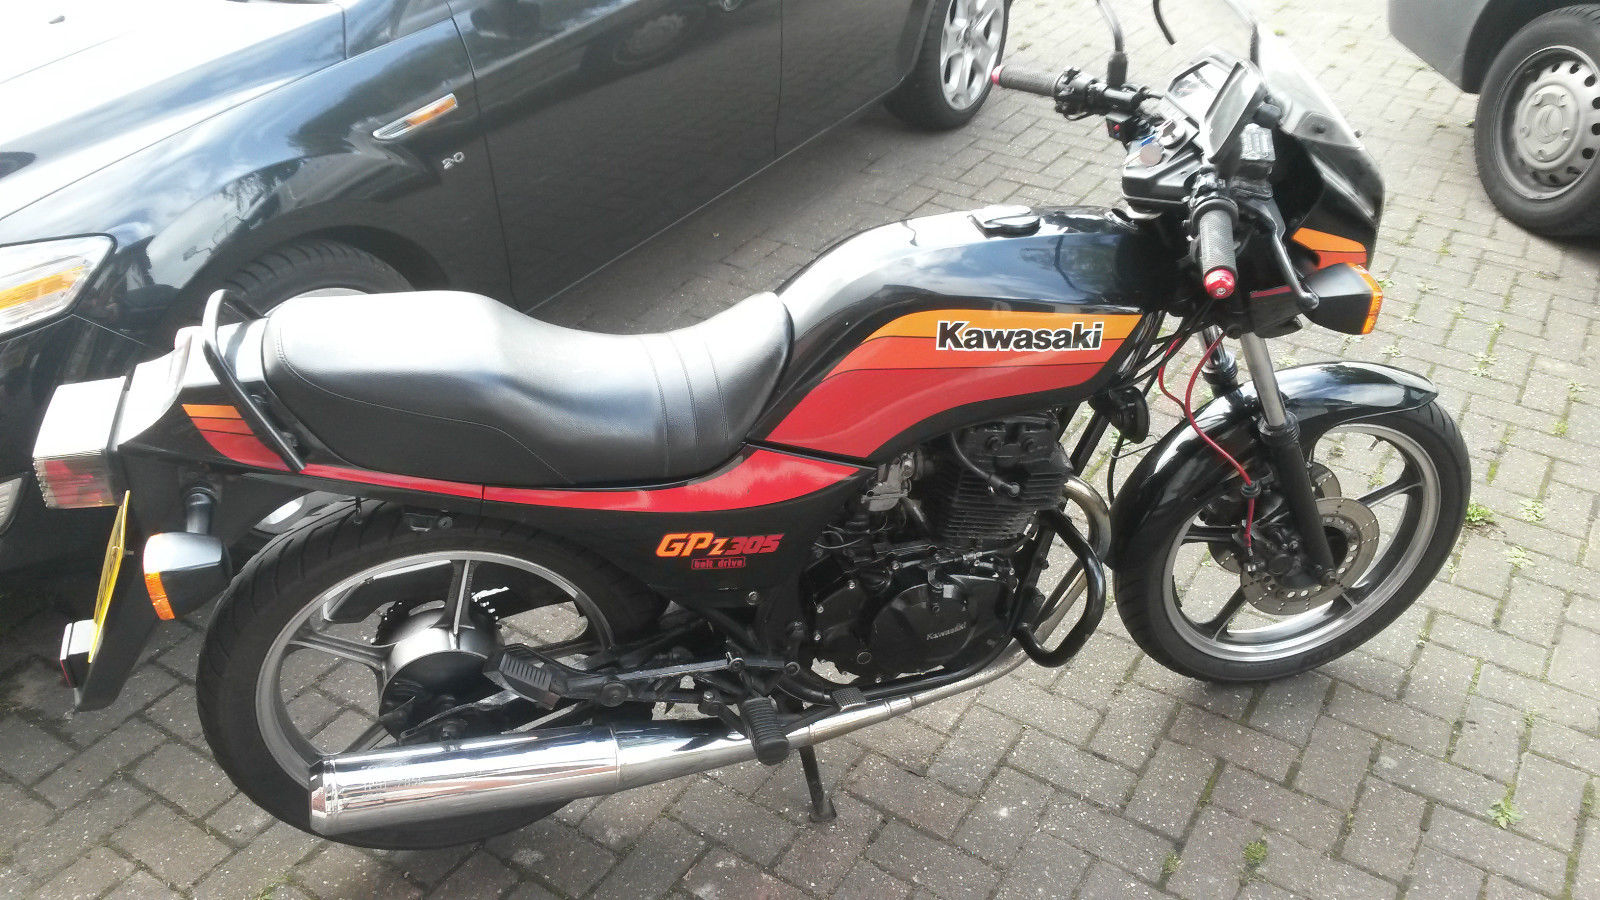 Kawasaki Classic looking